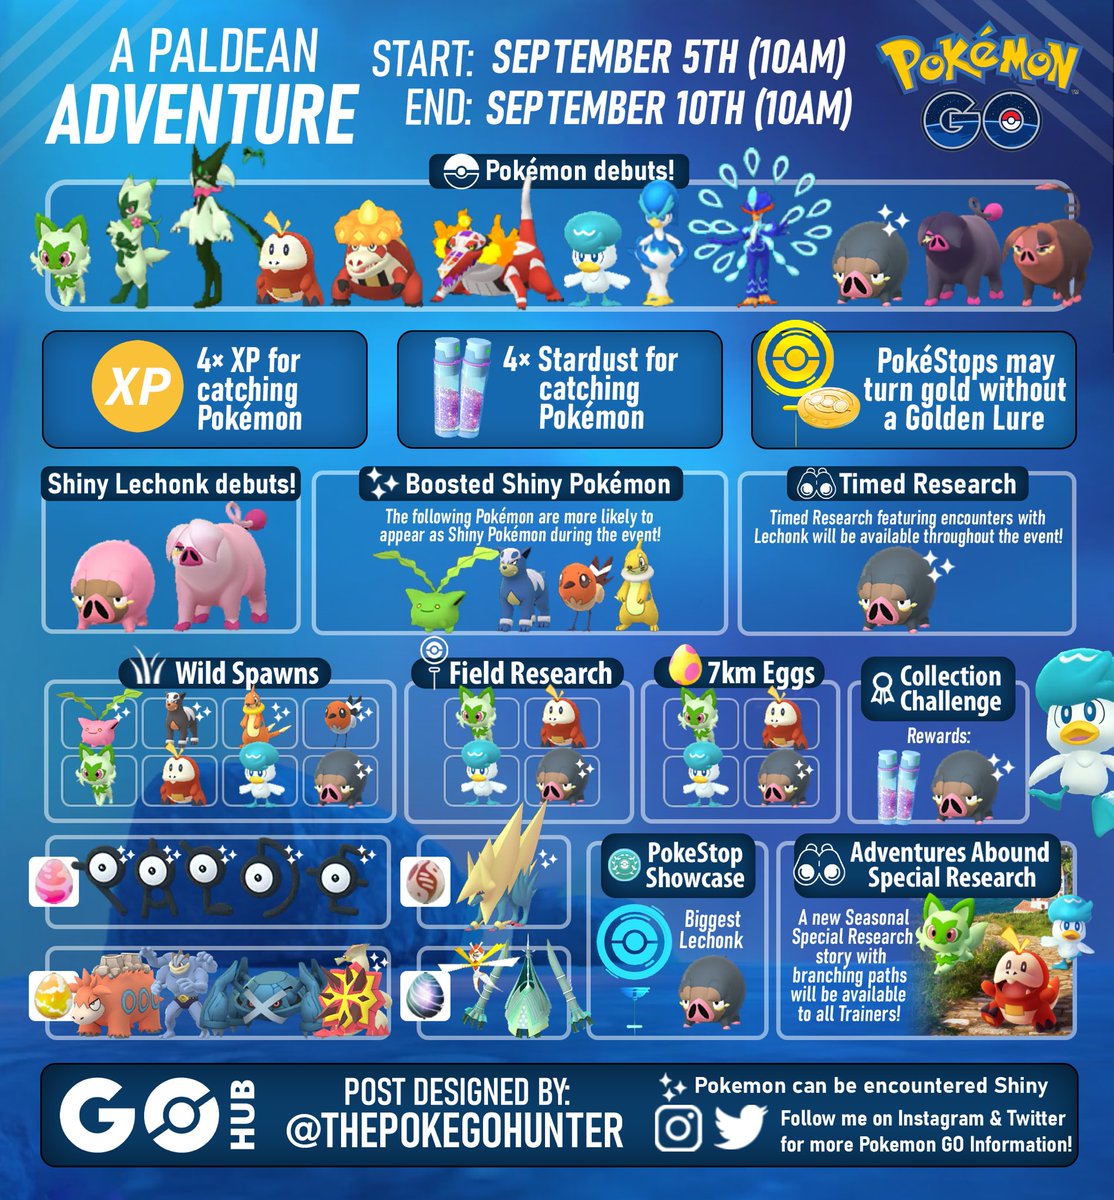 Welcome to Pokémon GO: Adventures Abound